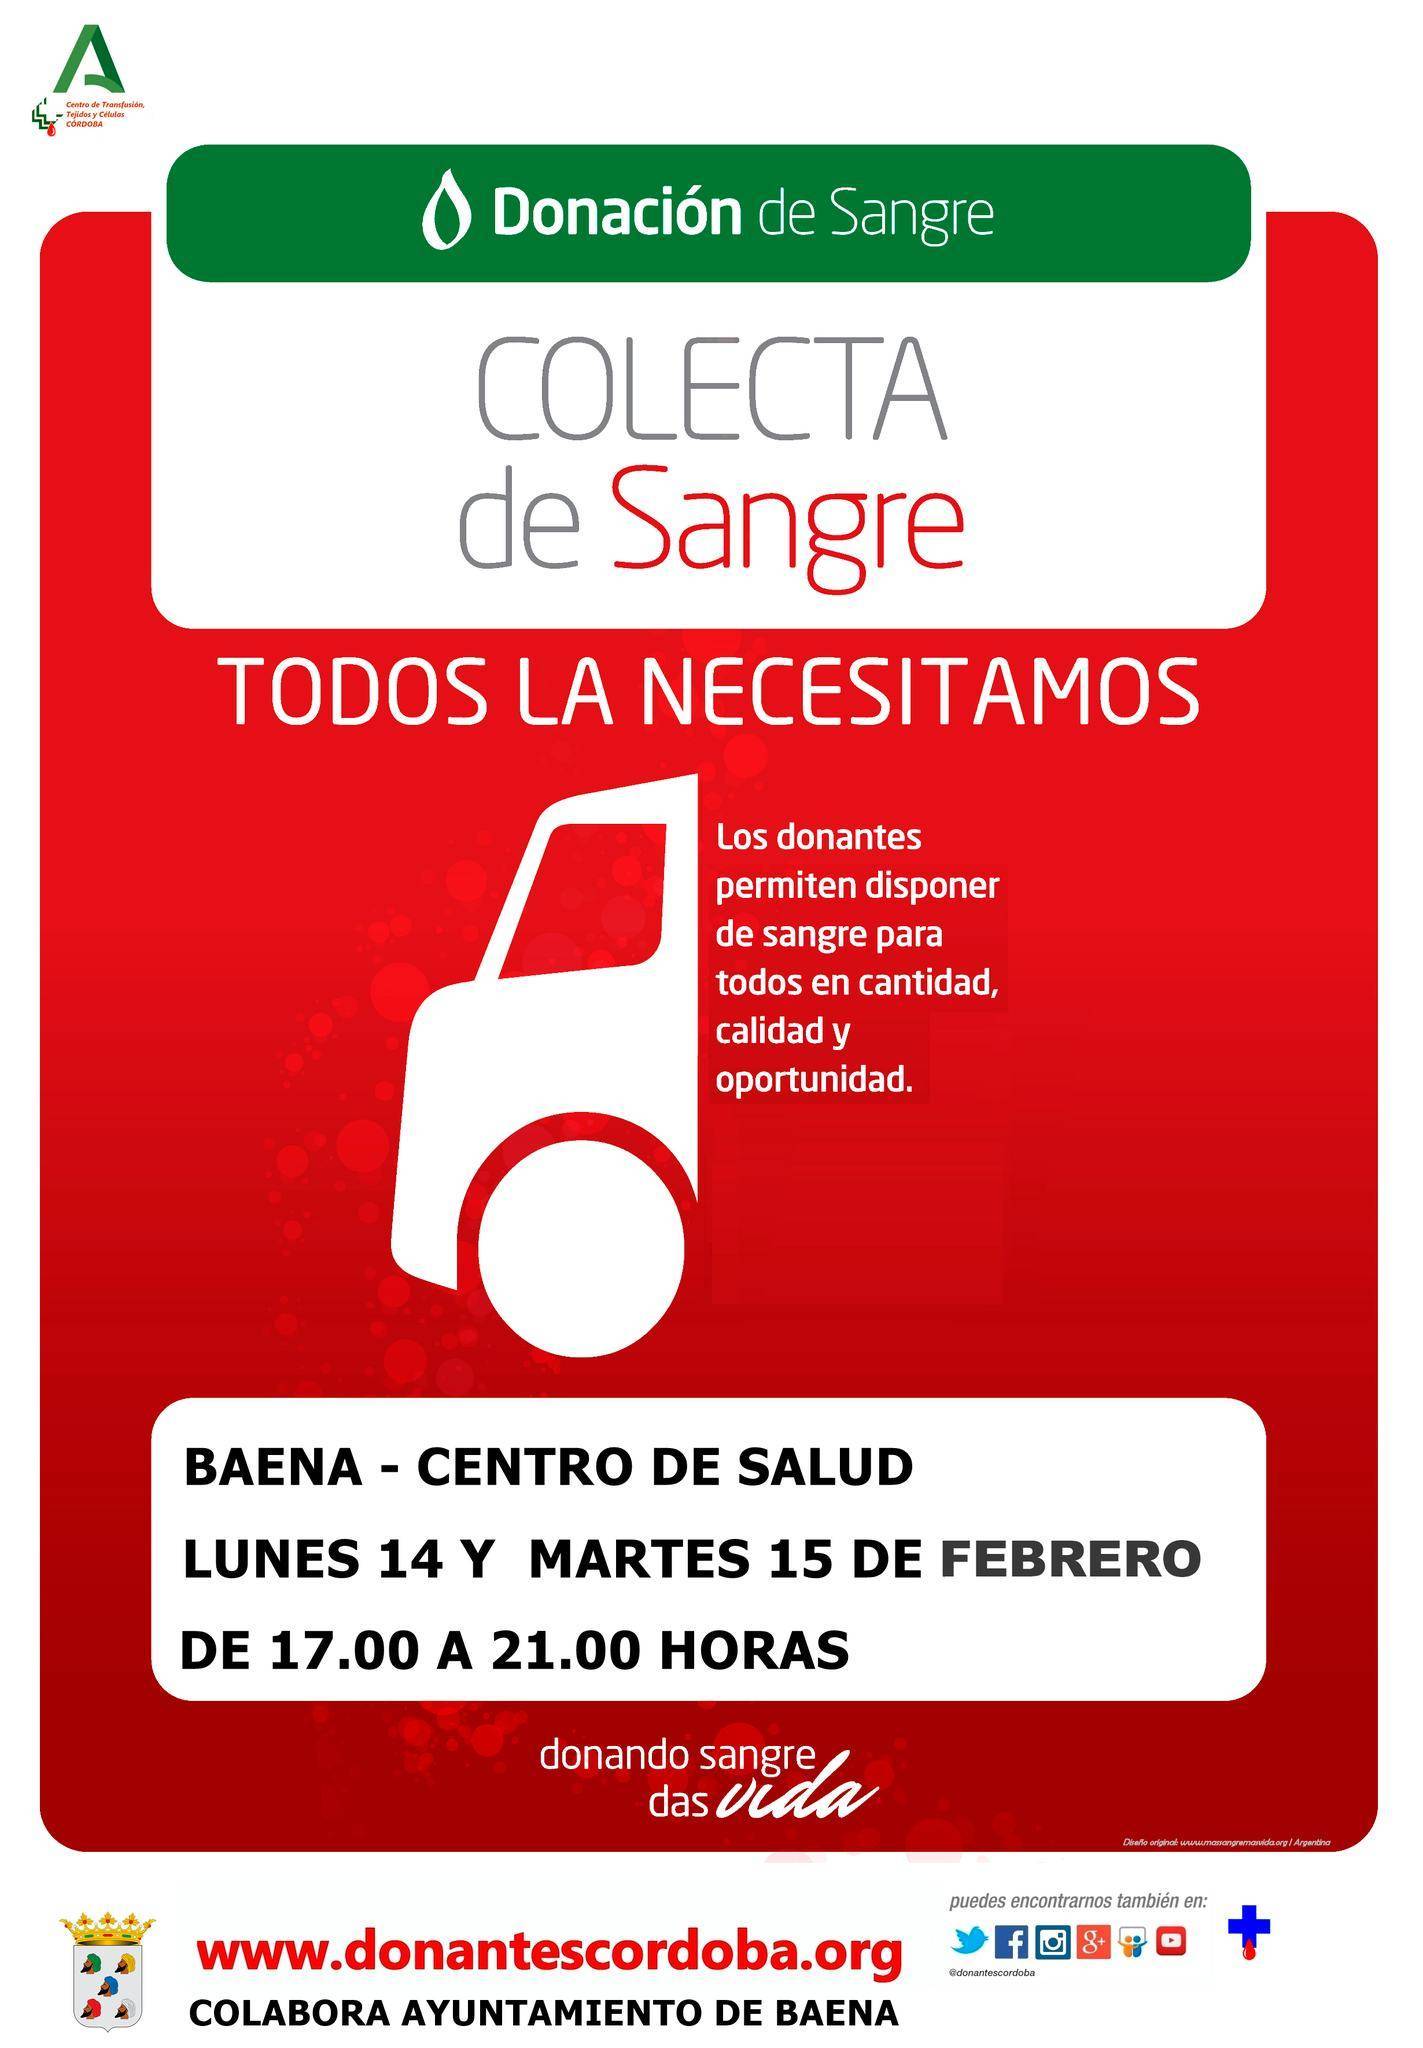 Donación de sangre (febrero 2022) - Baena (Córdoba)